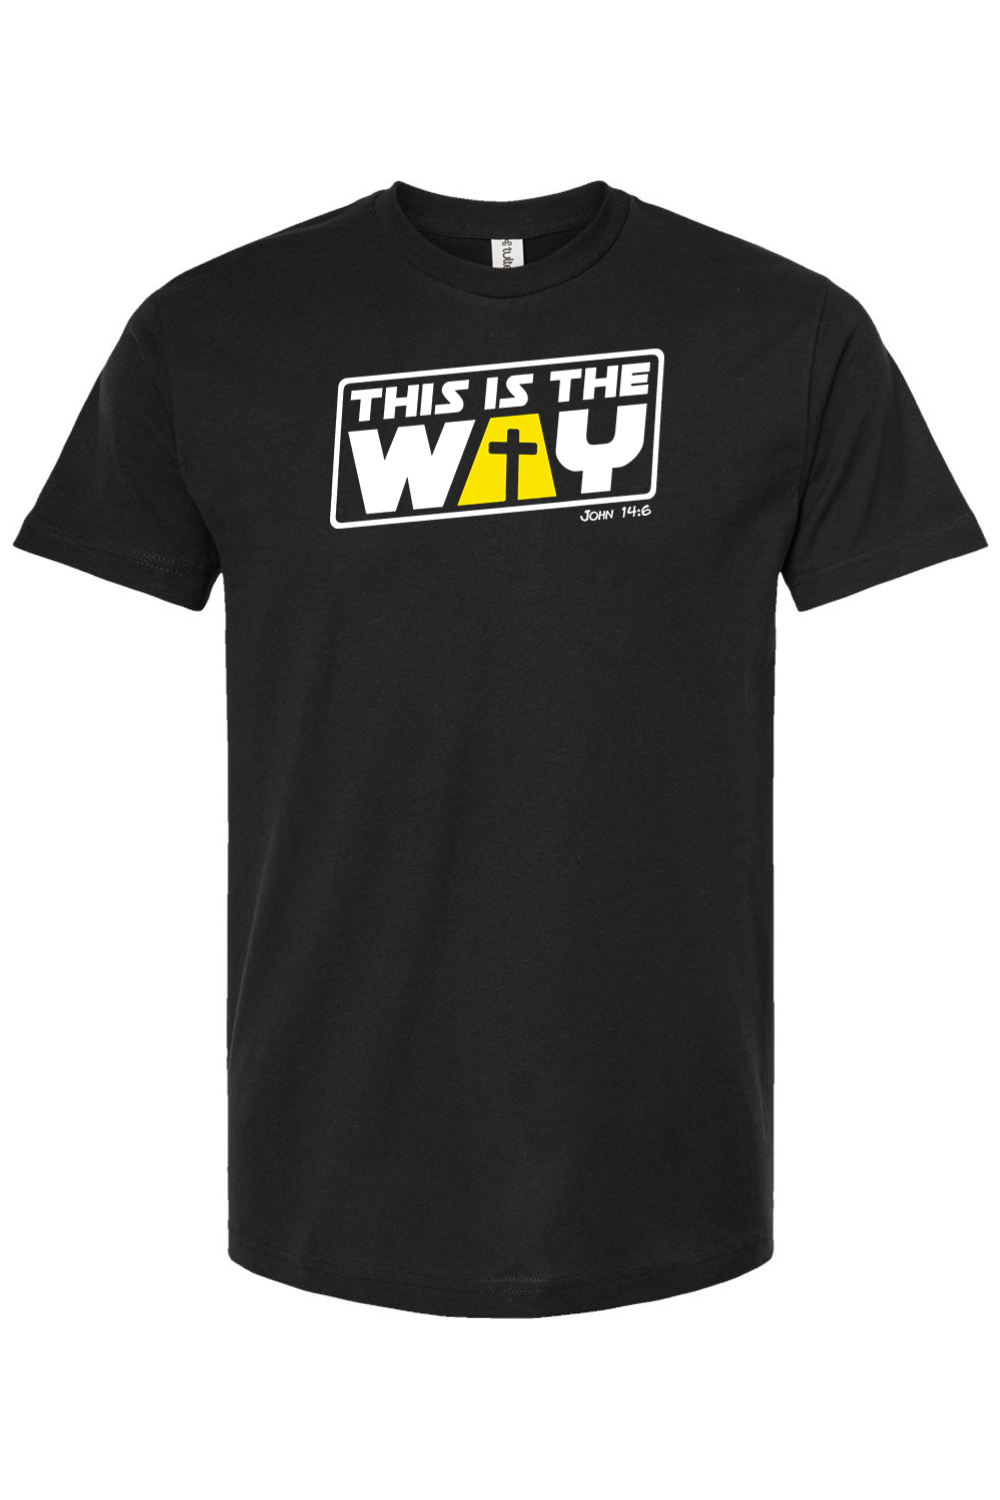 This is the Way (Mandolorian parody)- T-Shirt